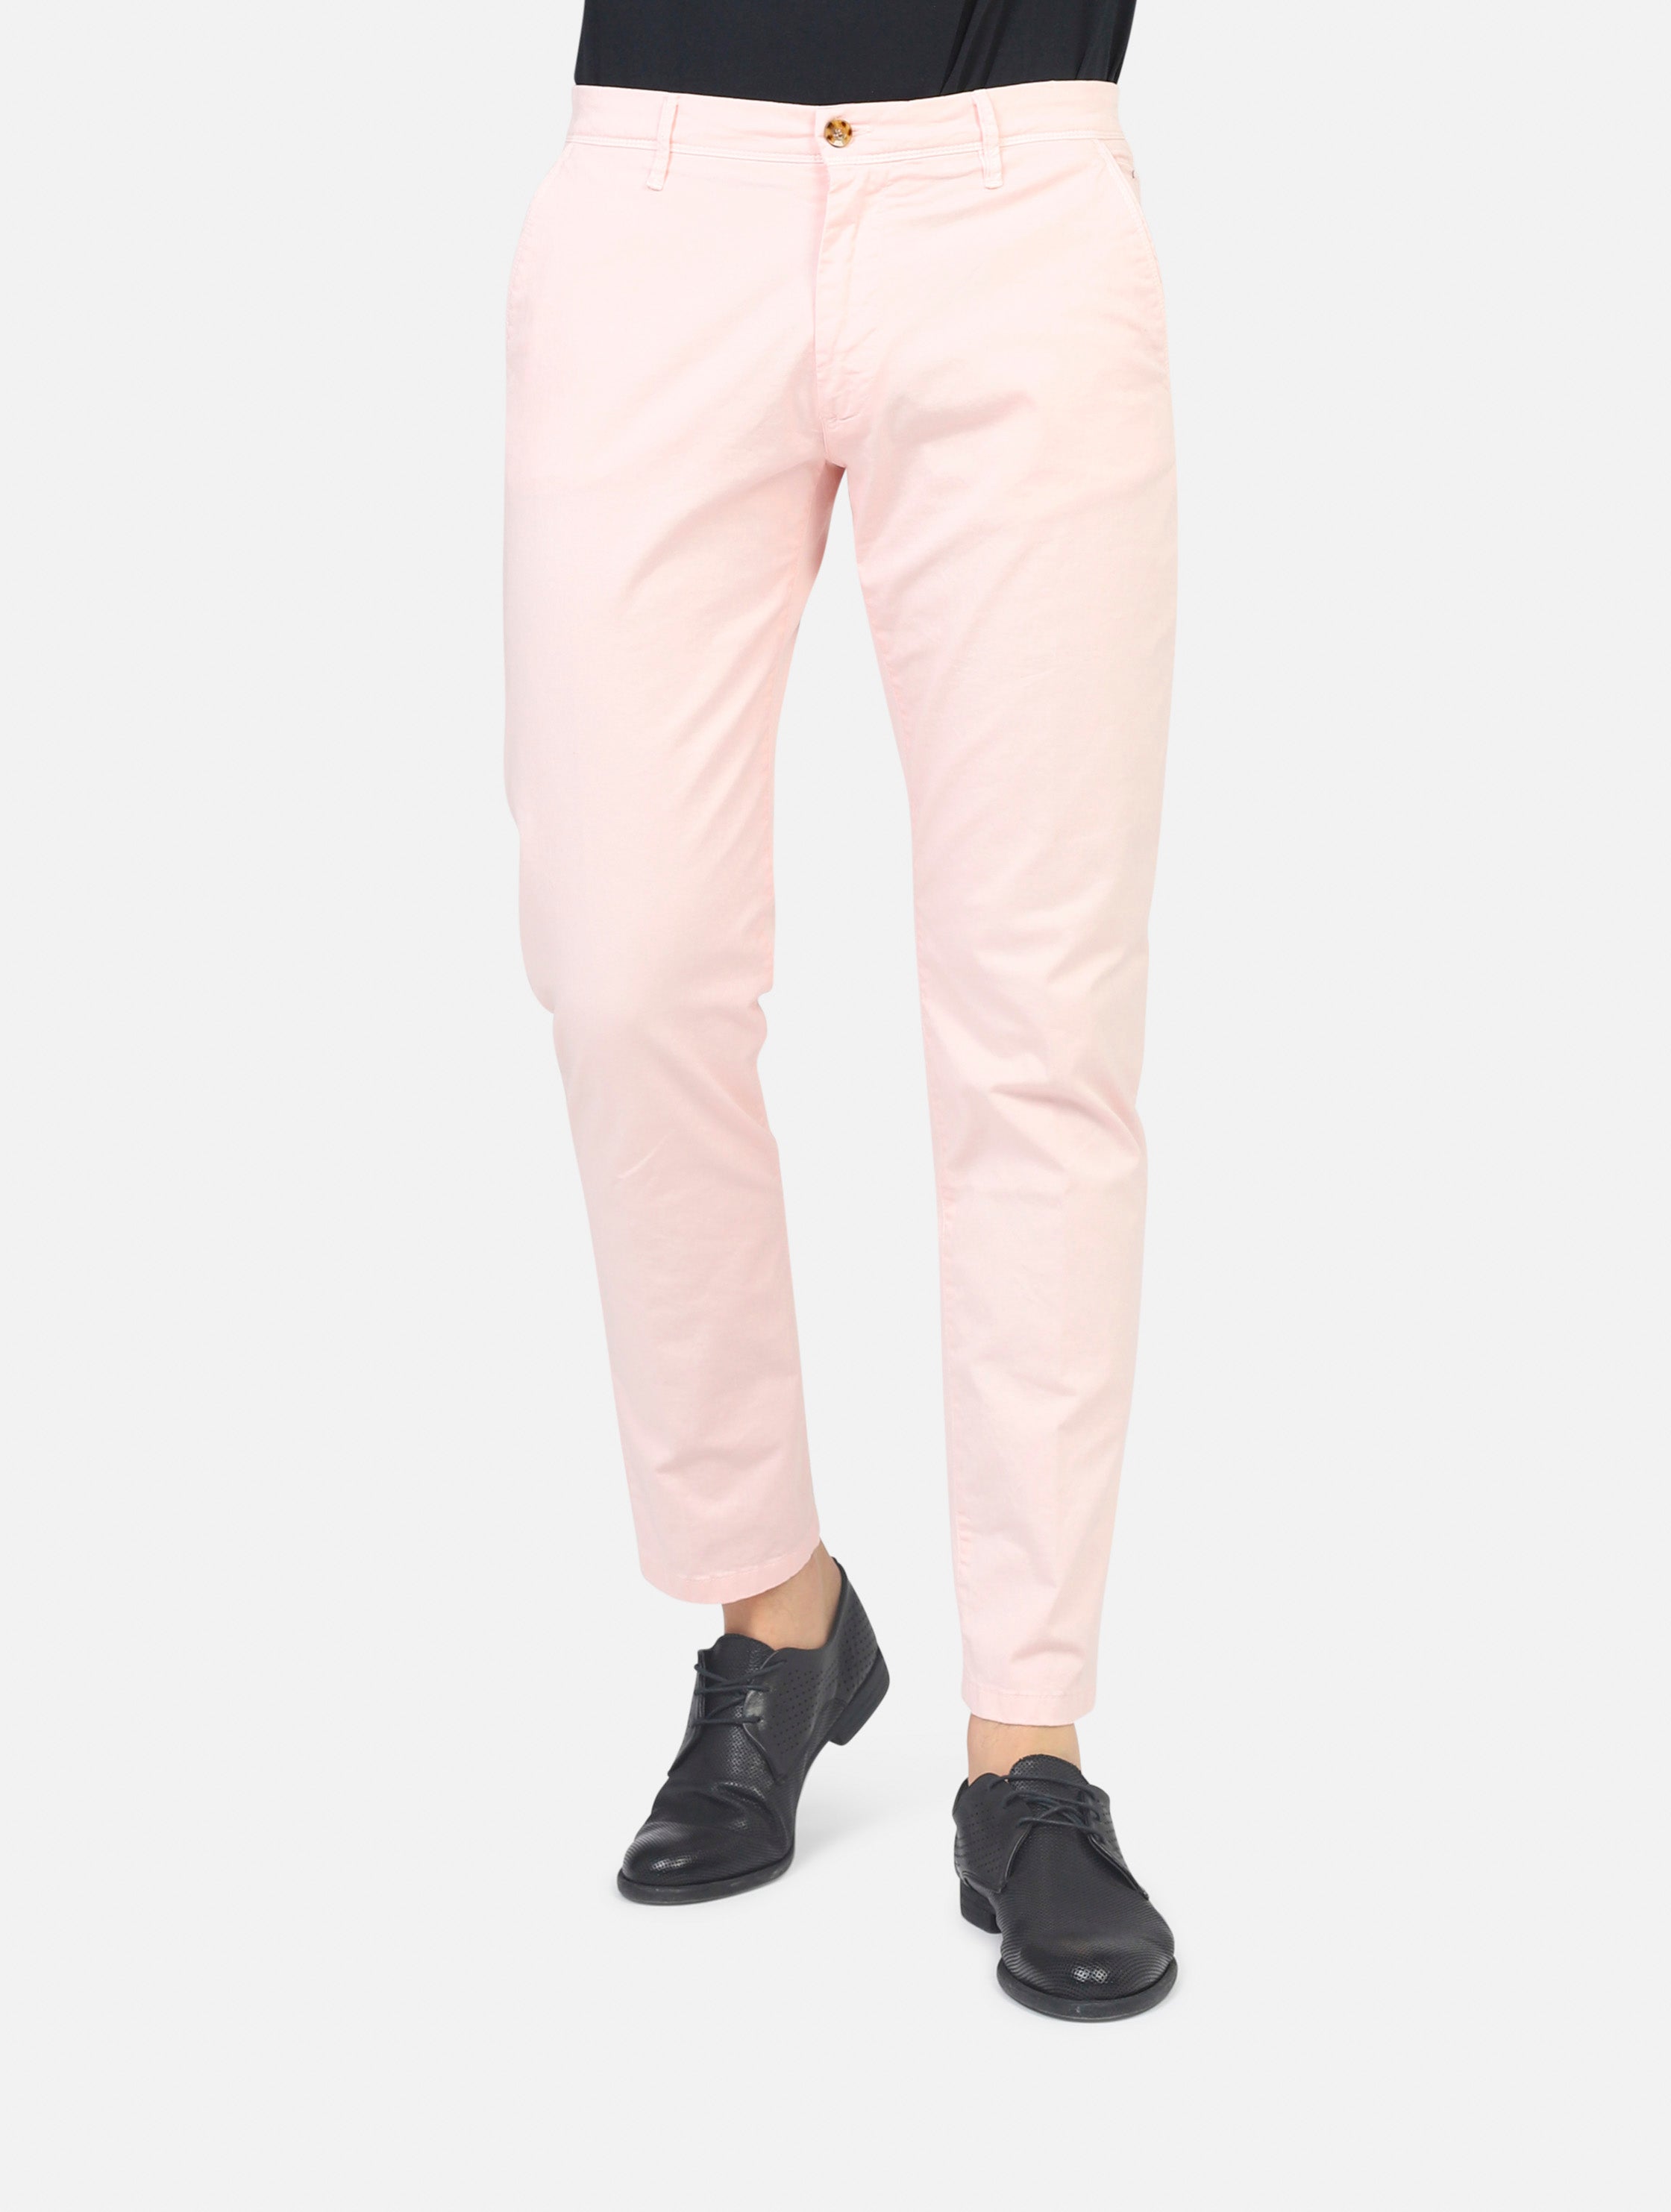 Pantalone officina 36  rosa uomo 